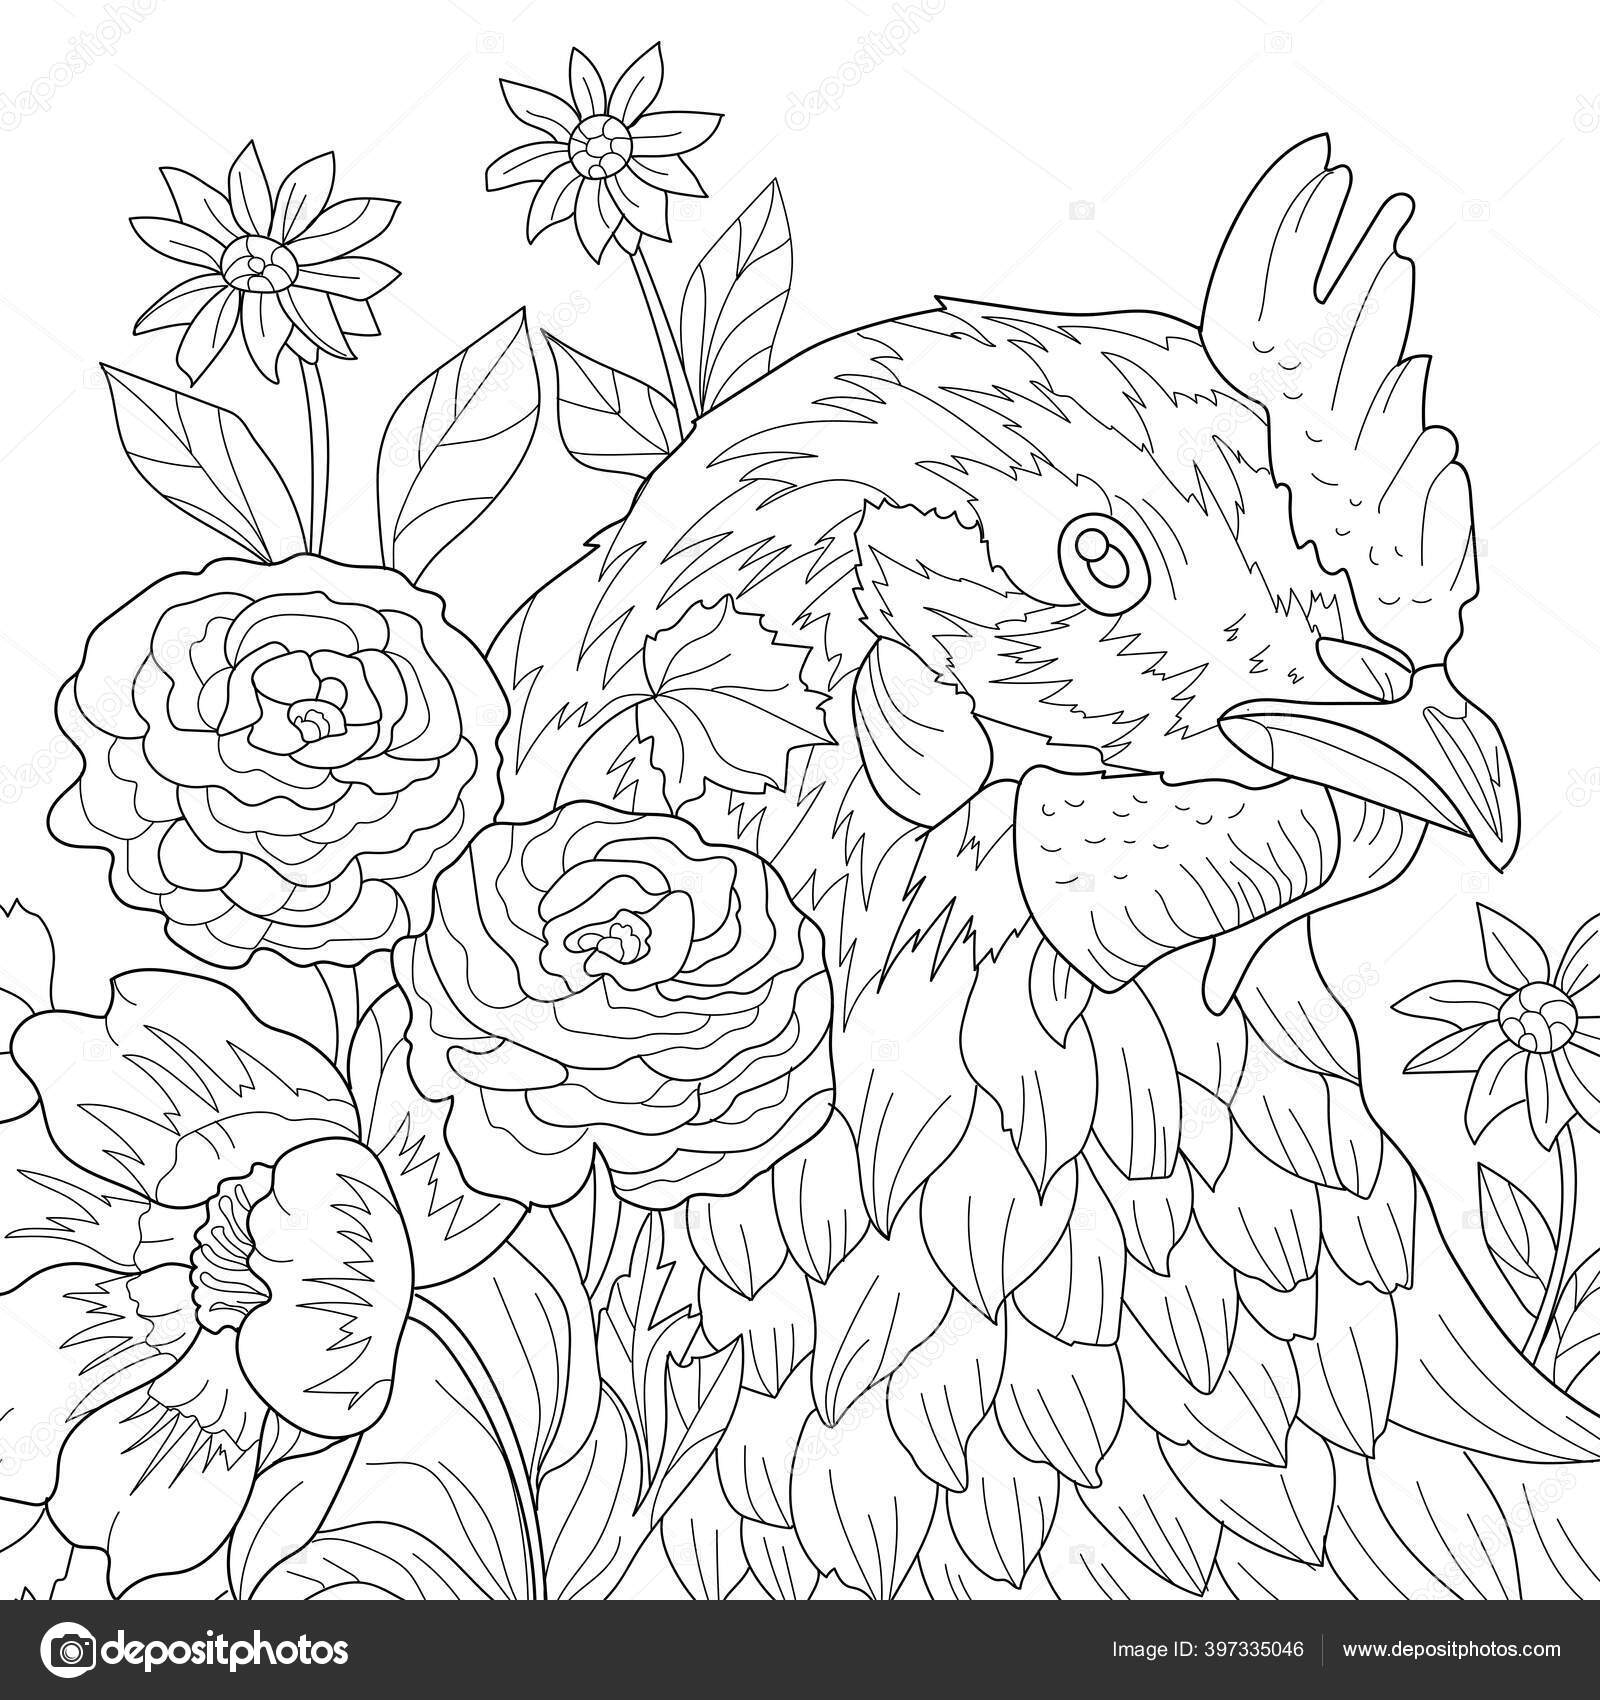 Coloring Illustration Picture Chicken Bird Animal Stock Photo By C Suriko 397335046